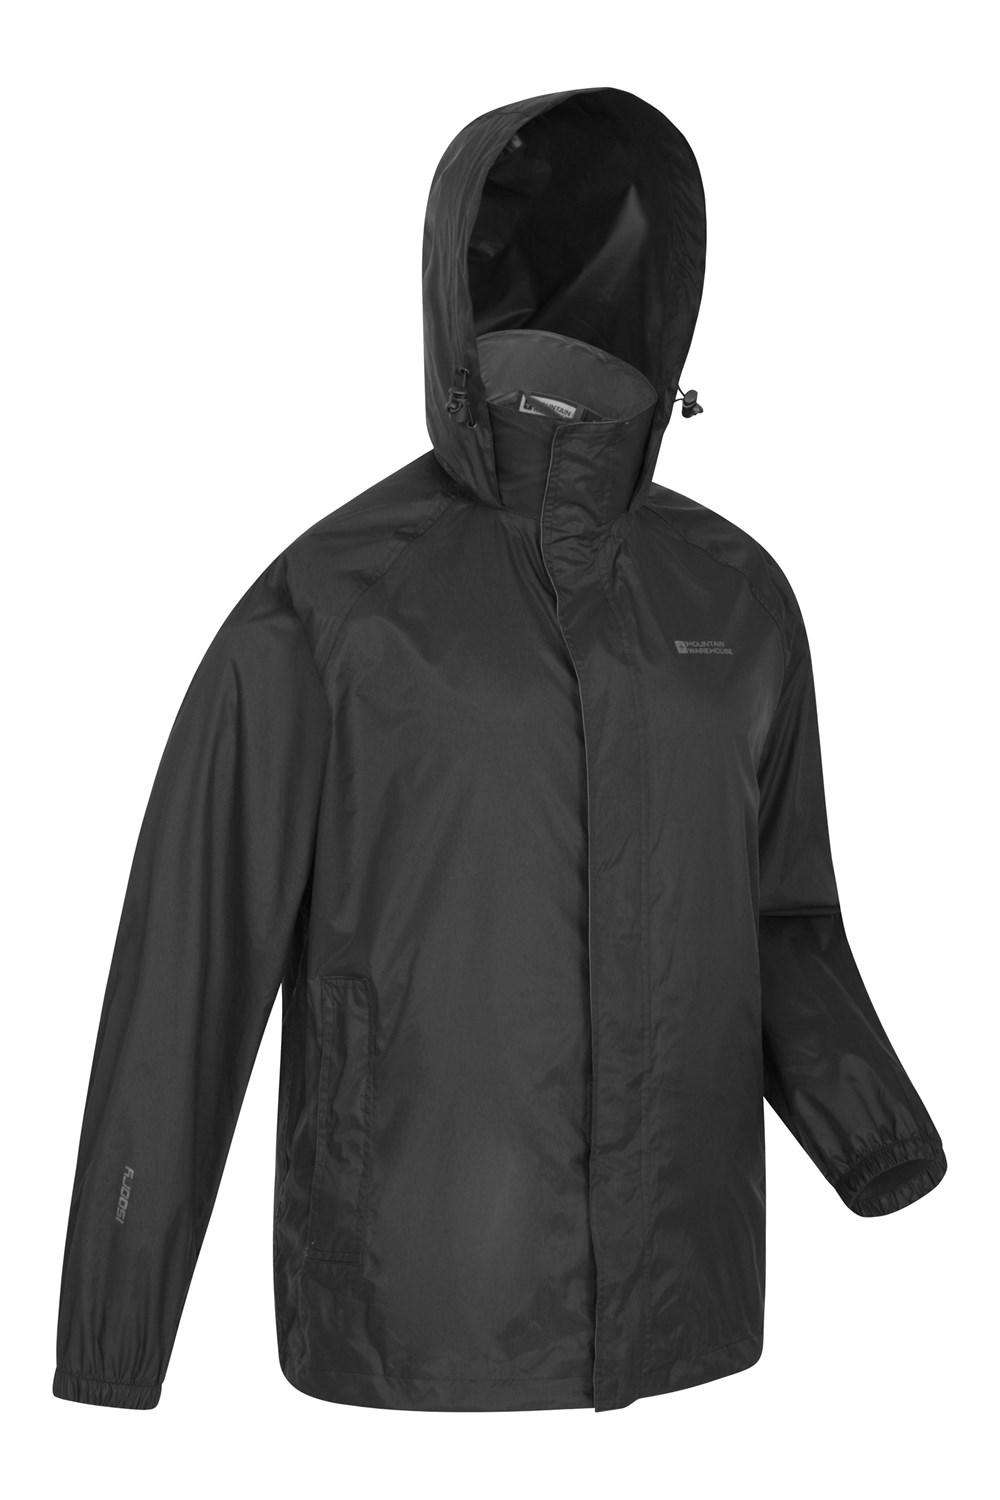 Mountain Warehouse Men's Waterproof Rain Jacket Breathable Coat ...